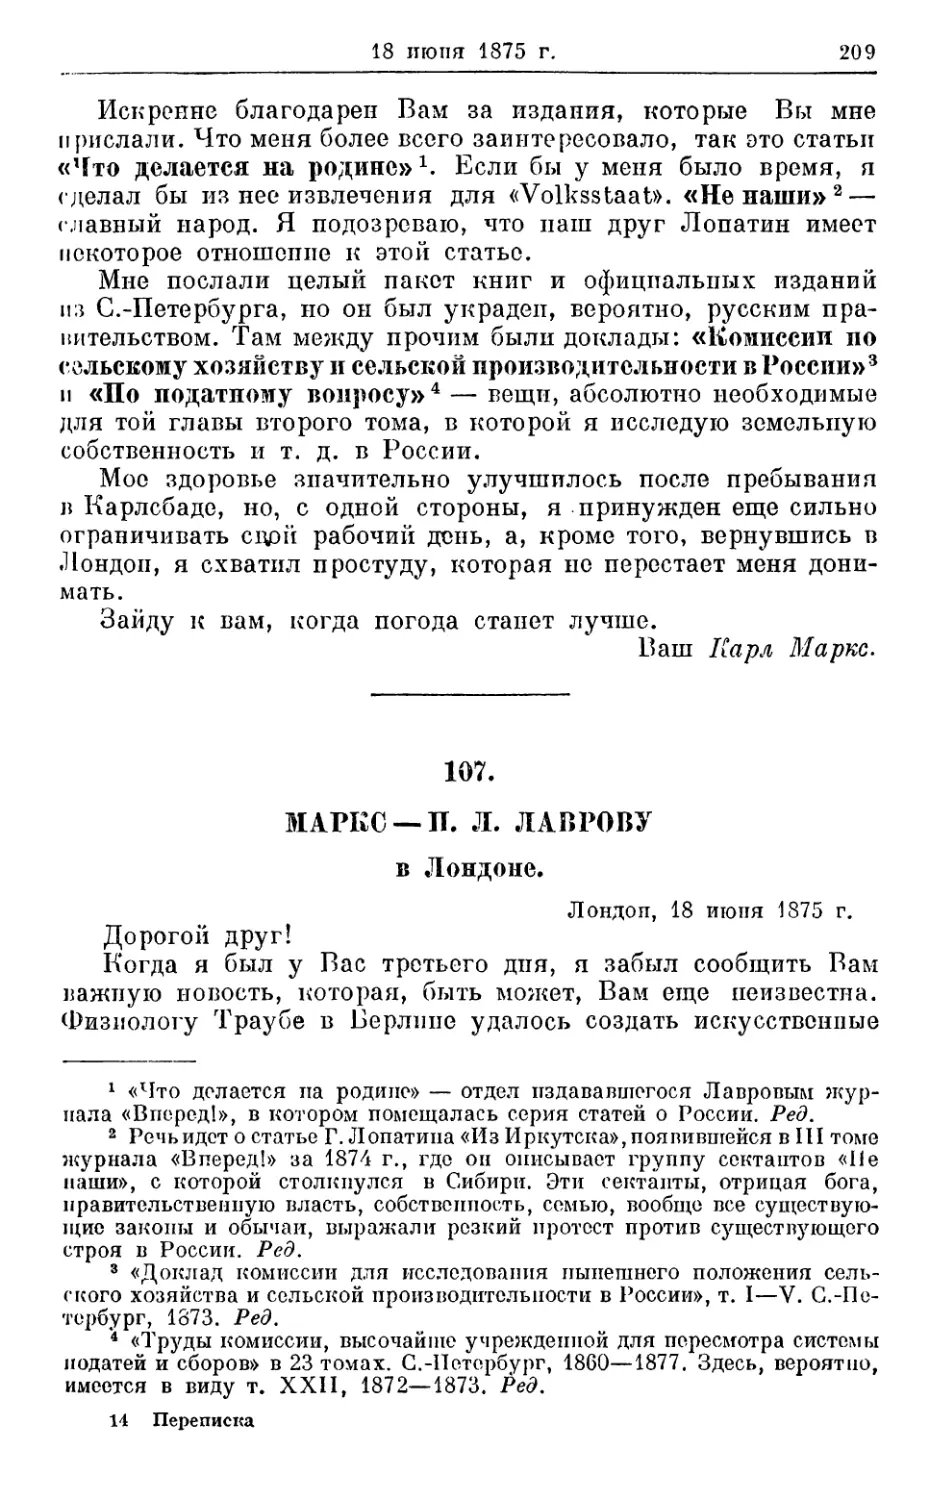 107. Маркс — П. Л. Лаврову, 18 июня 1875г